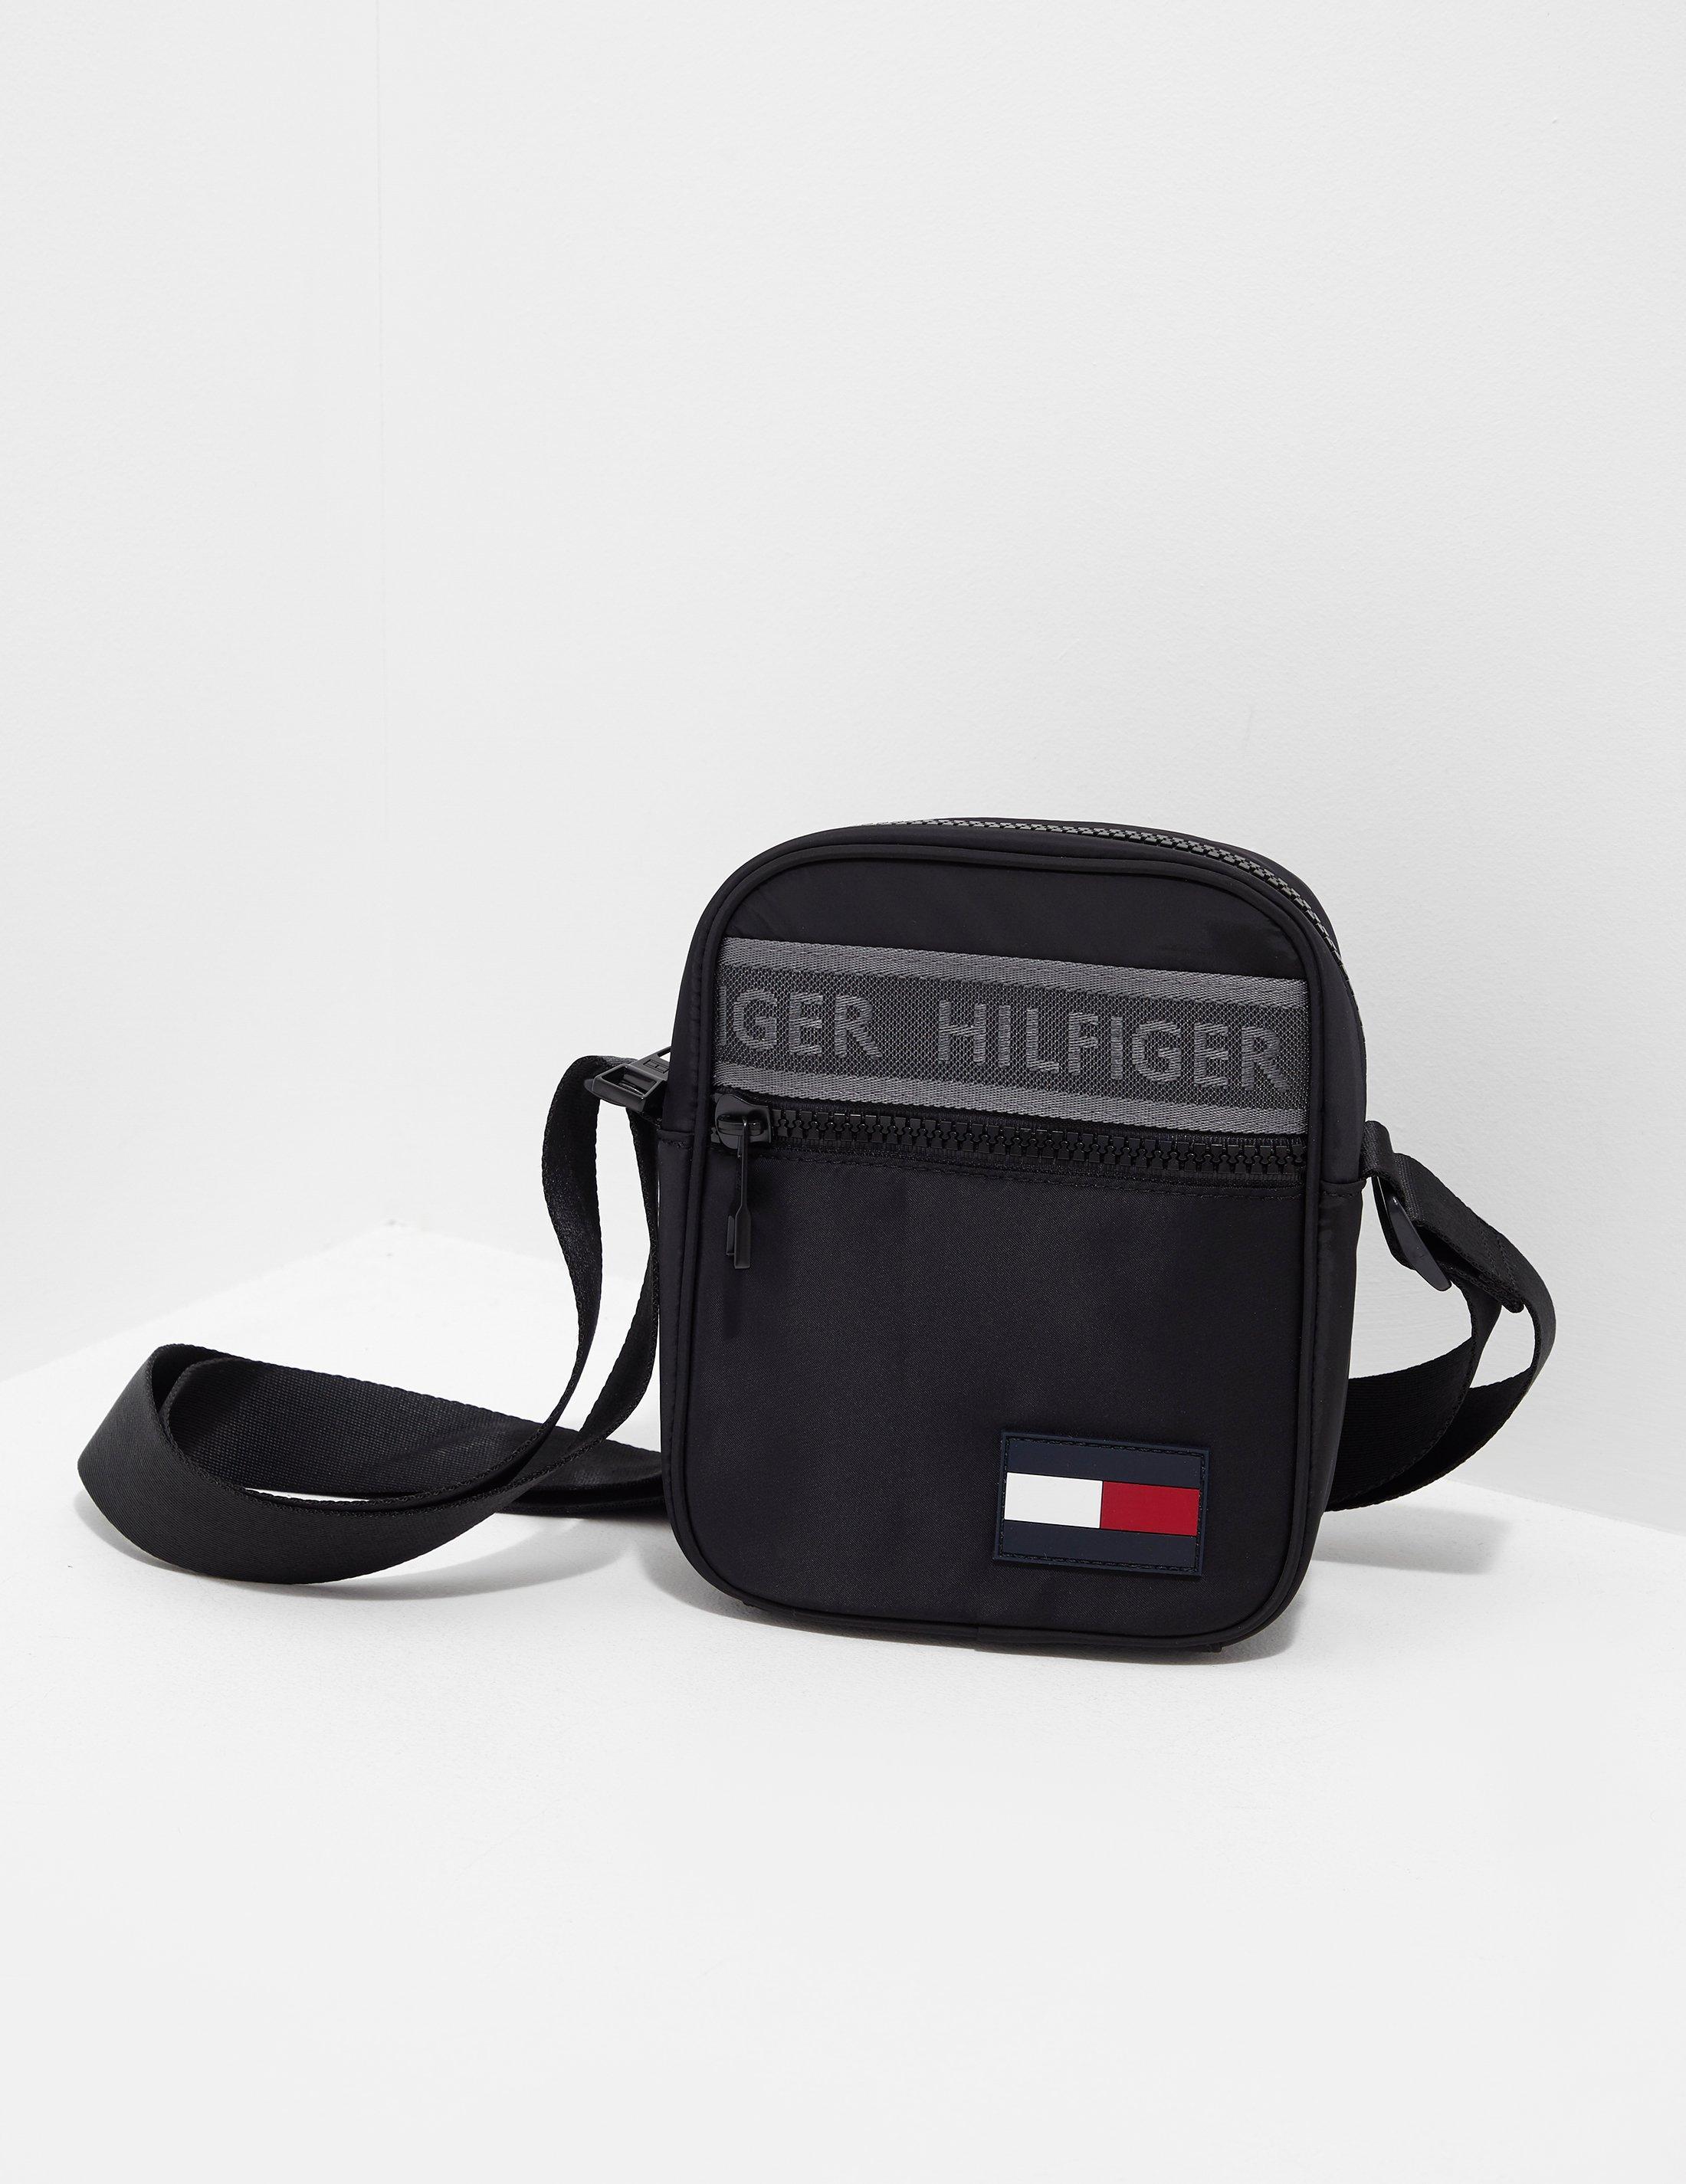 Tommy Hilfiger Tape Flag Small Item Bag in Black for Men - Lyst